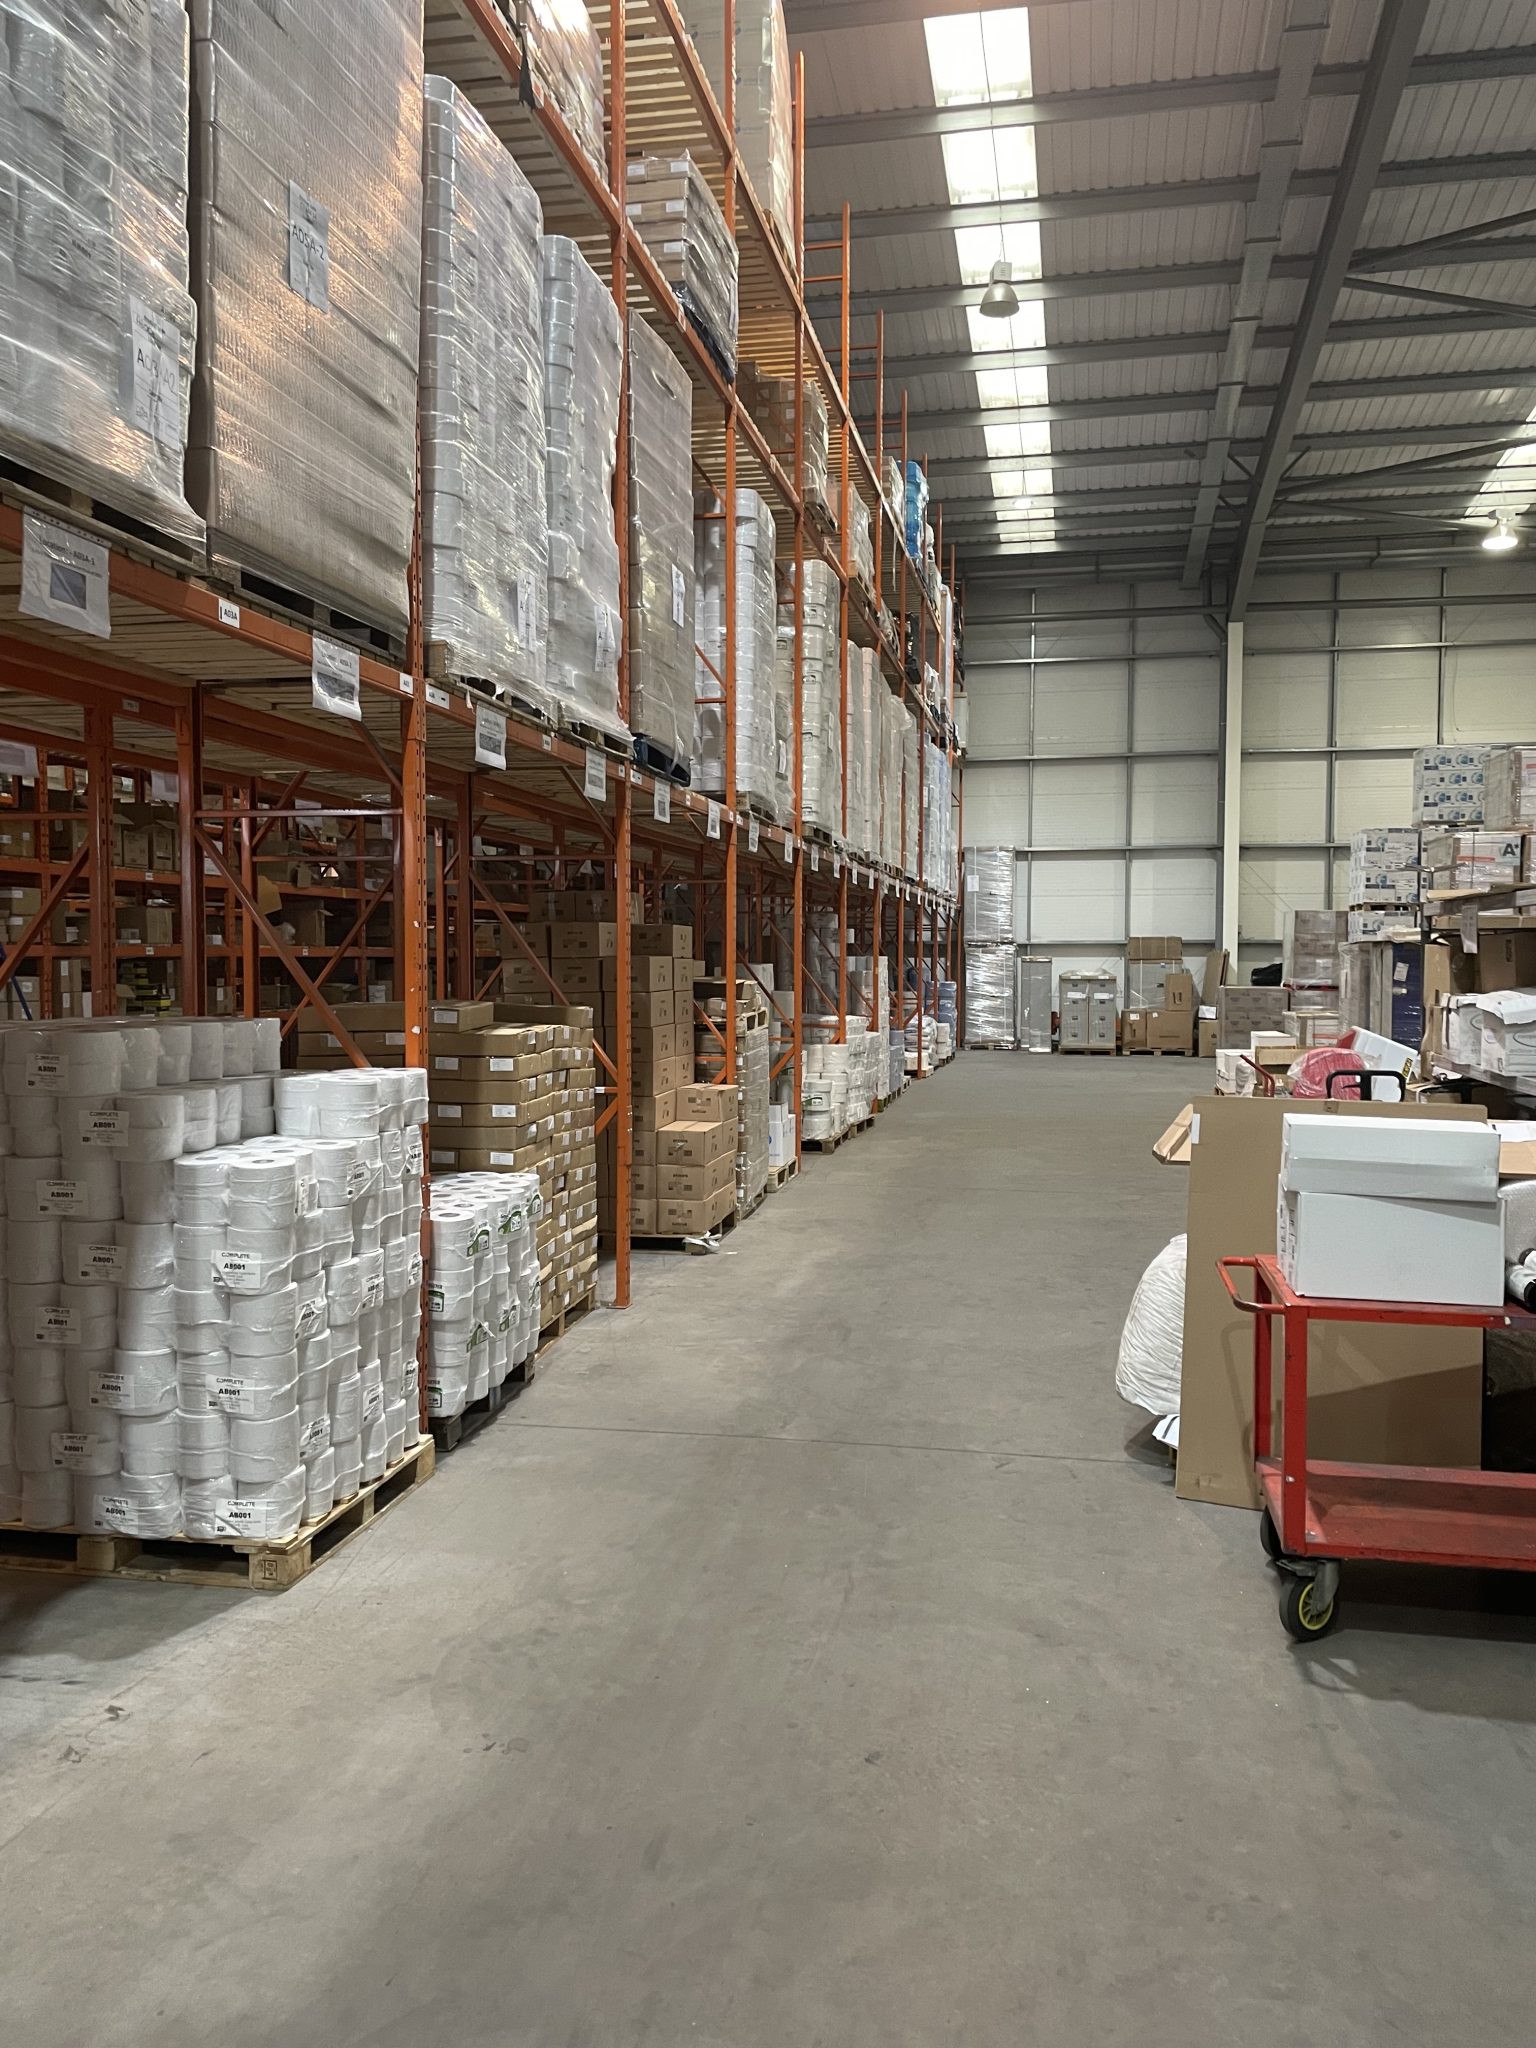 Warehousing environment storing, picking and packaging.